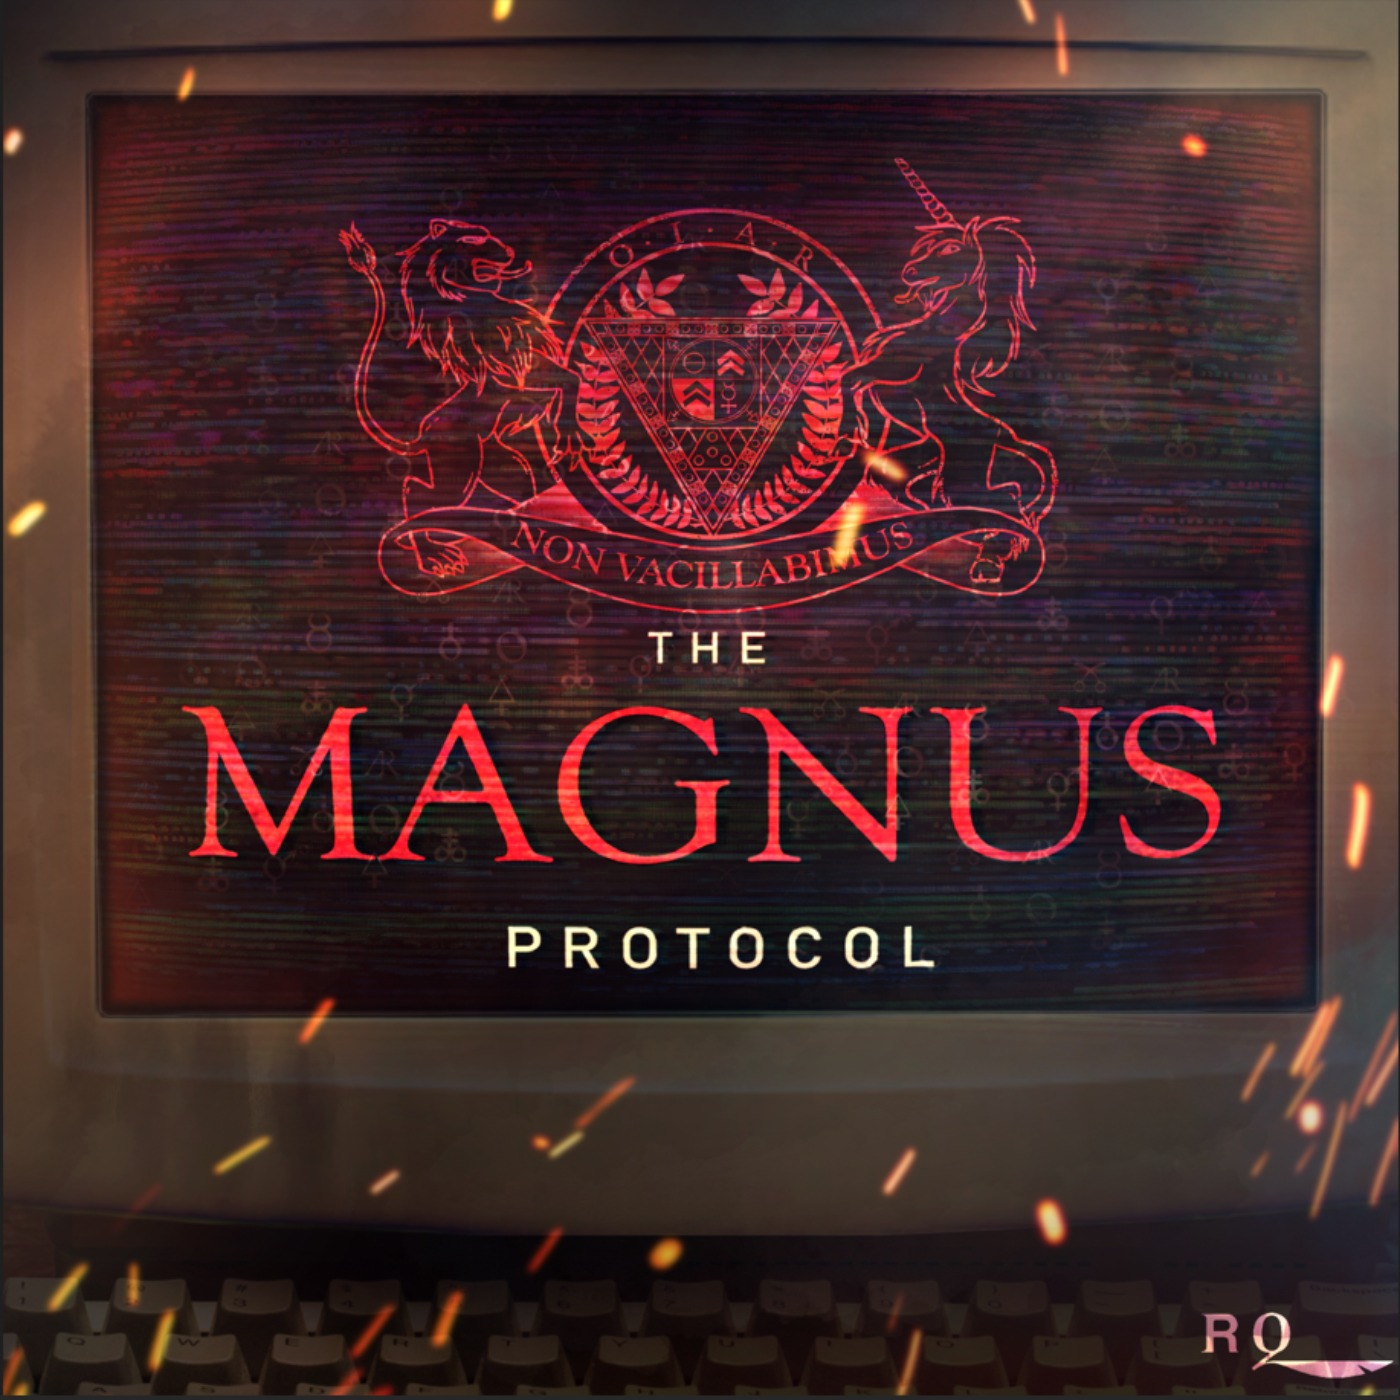 The Magnus Protocol 16 – Anti-Social